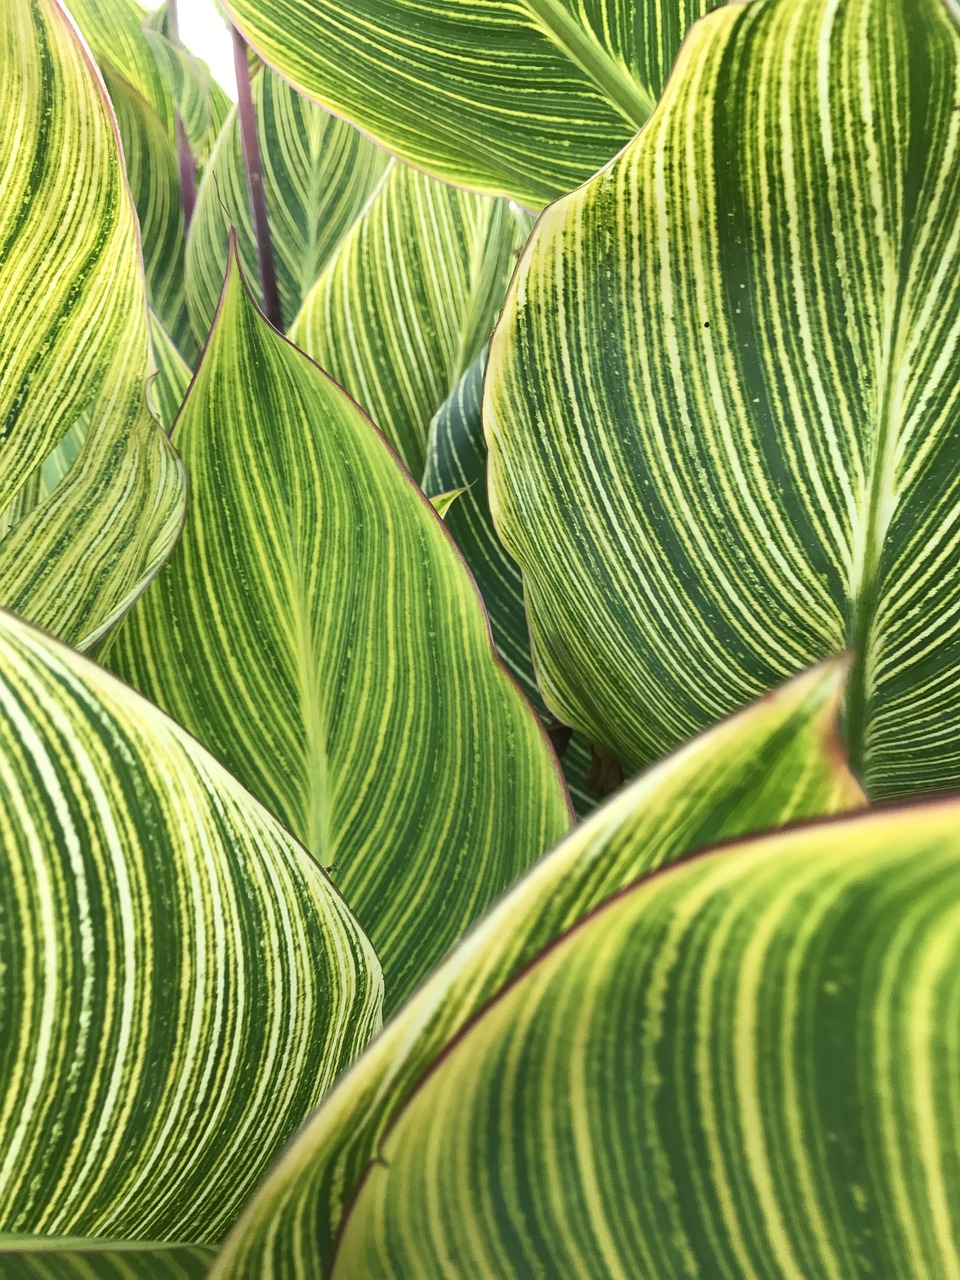 leaves striped pattern free photo